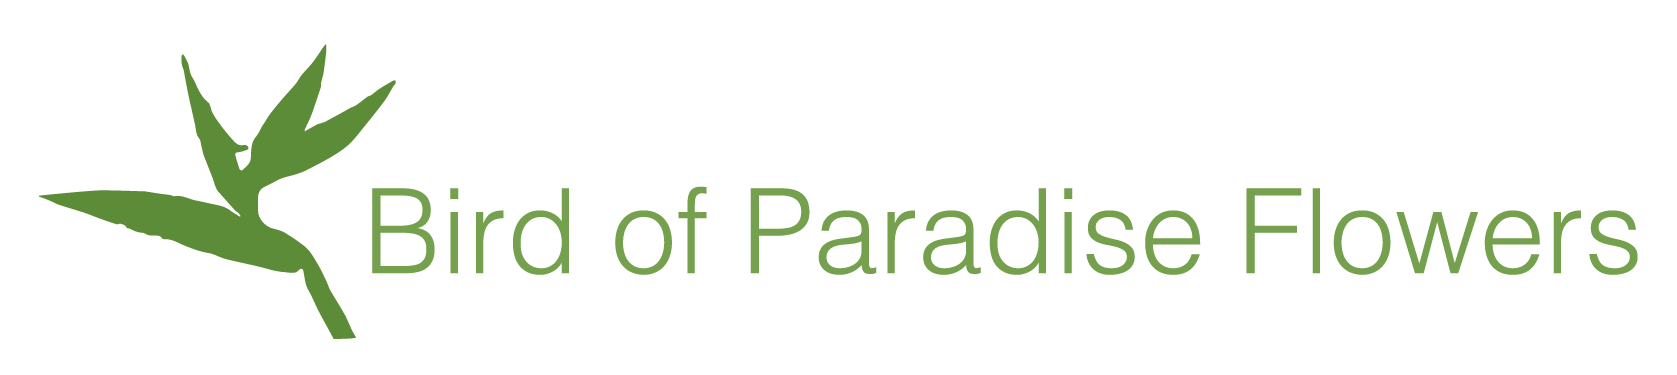 Paradise Flower Logo - Valentine's Day Flower Deals of Paradise Flowers